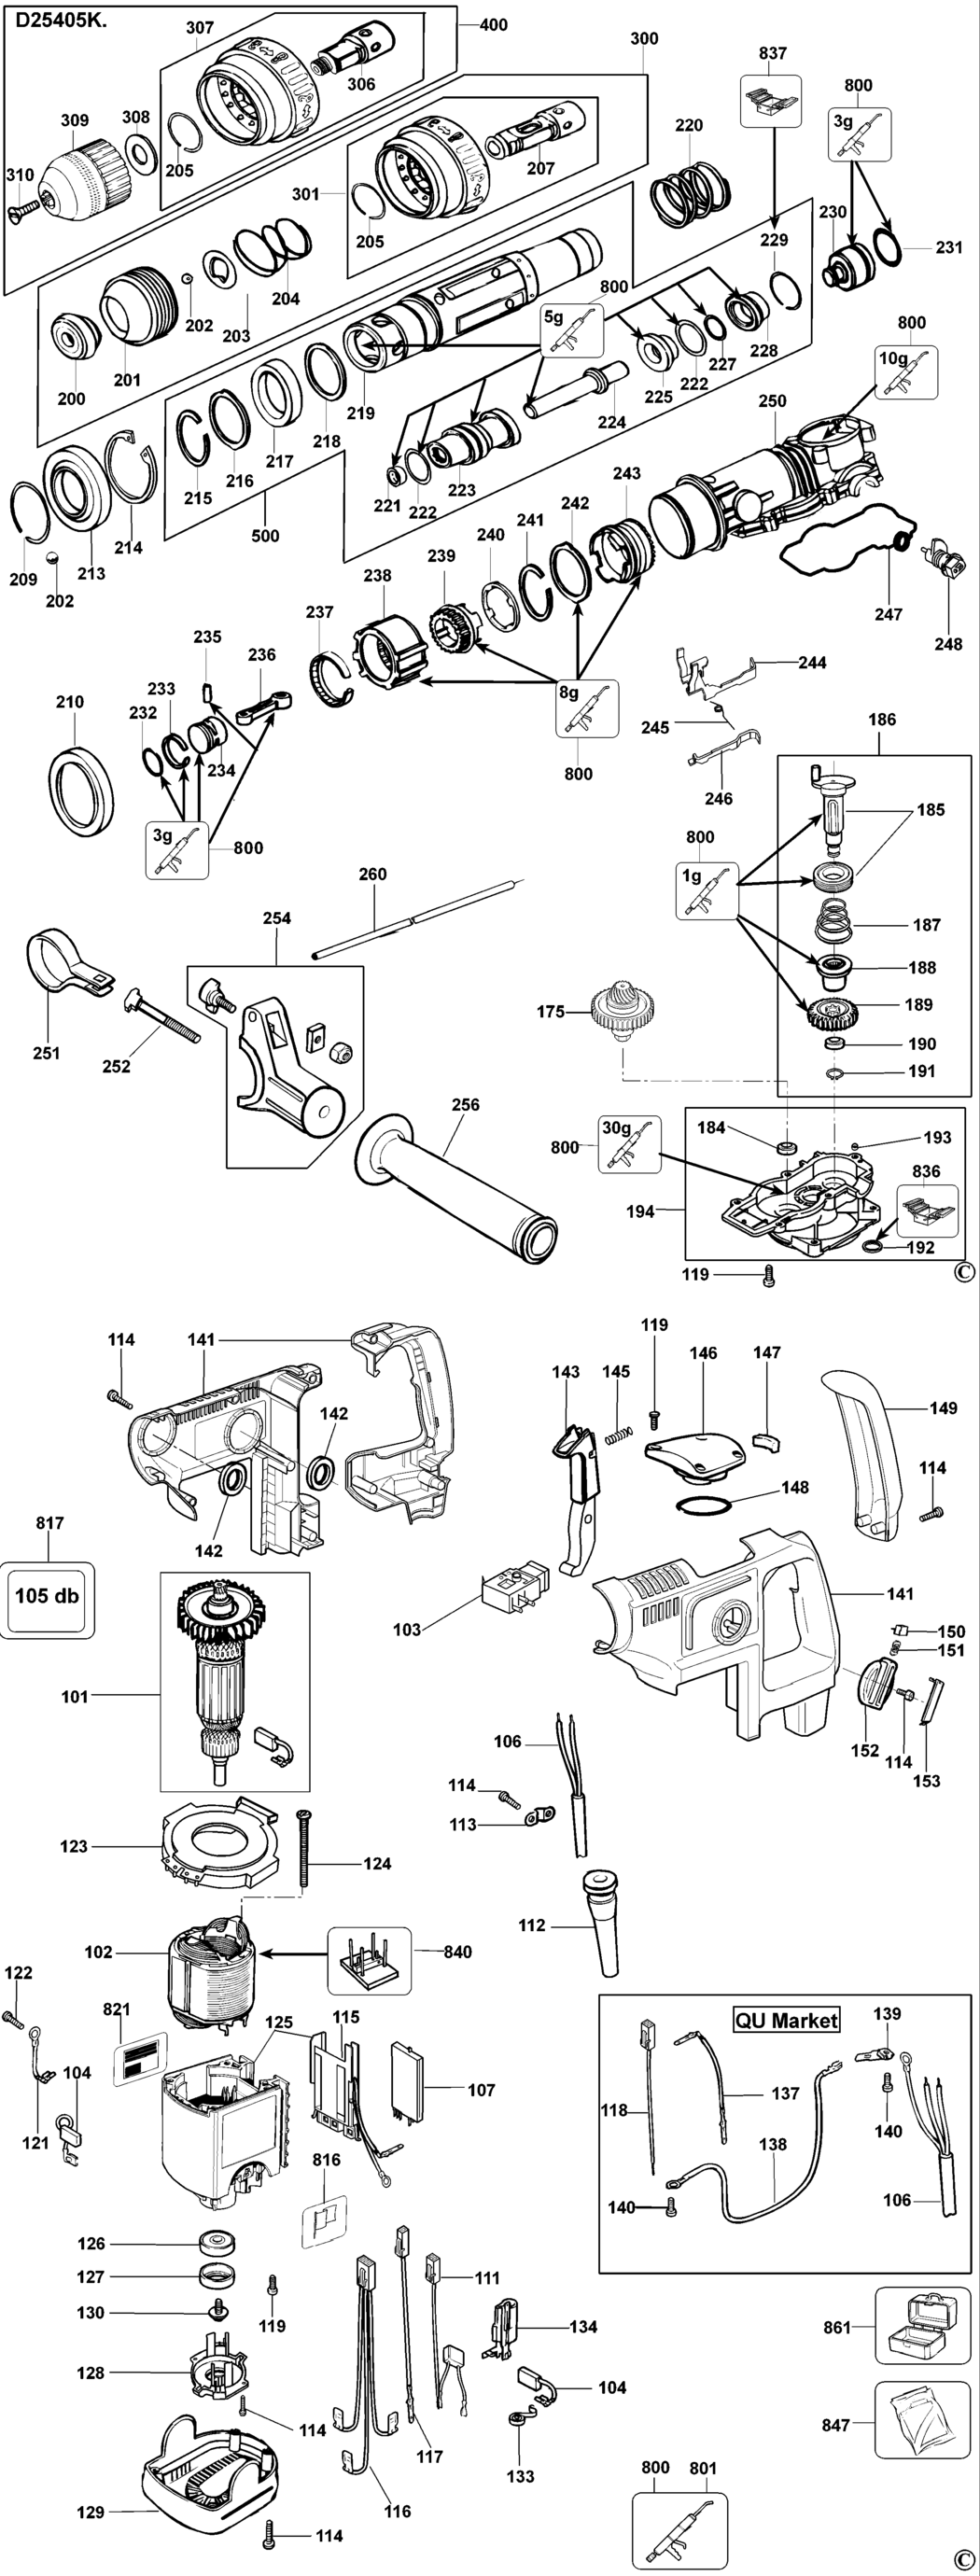 Dewalt D25405K Type 2 Rotary Hammer Spare Parts